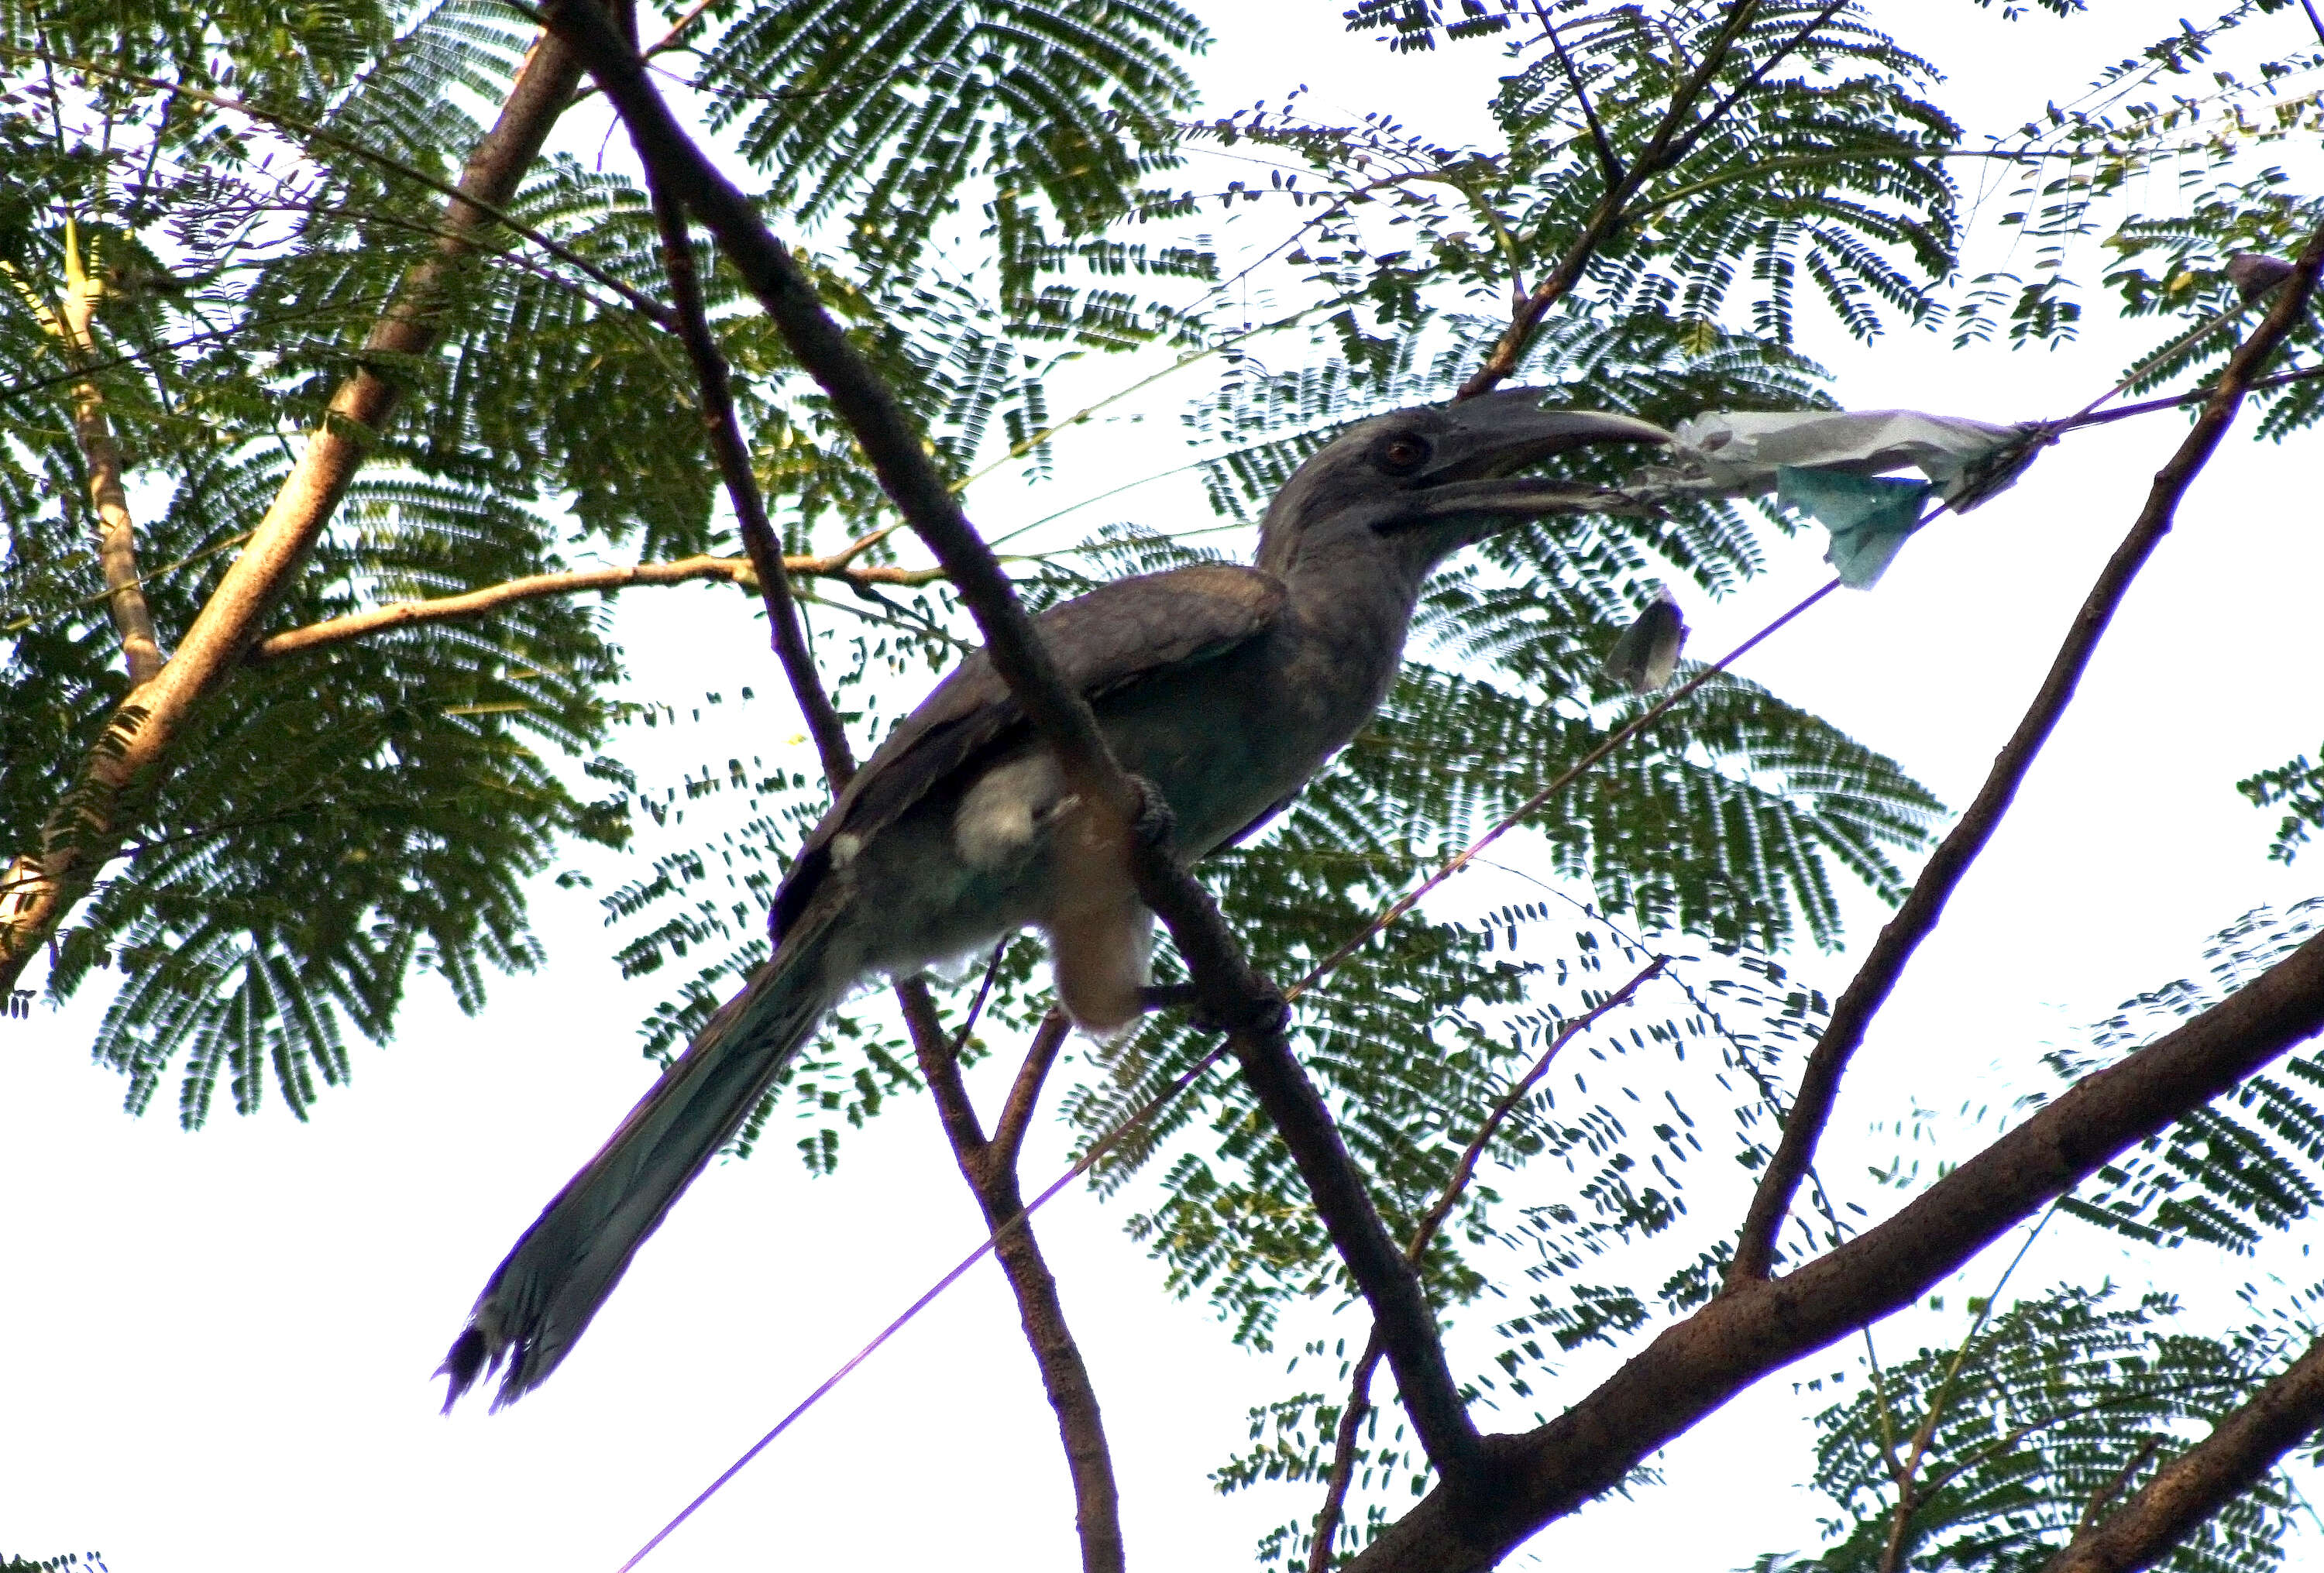 Image of Indian Grey Hornbill